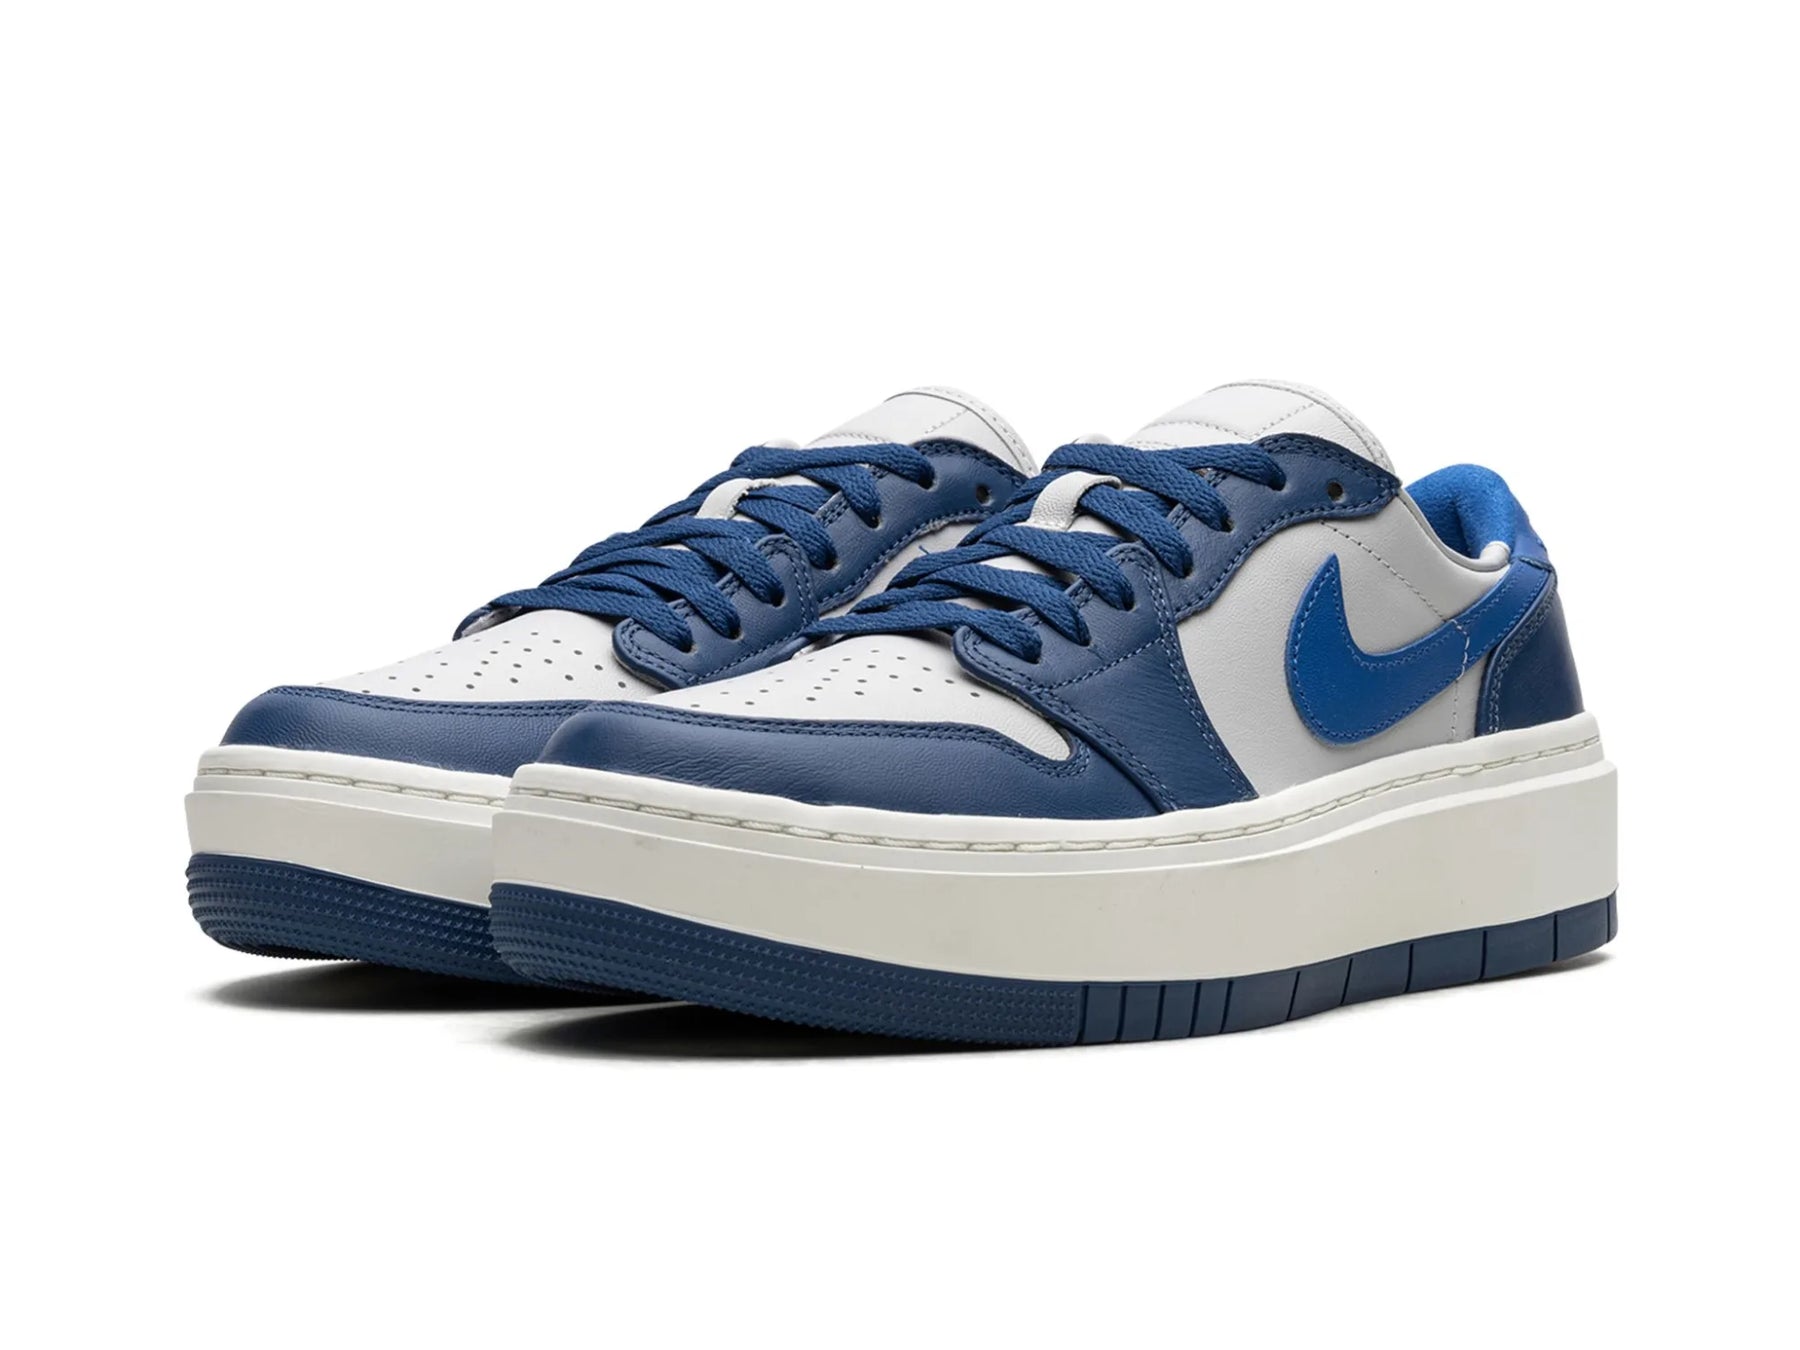 Nike Air Jordan 1 Elevate Low "French Blue" - street-bill.dk